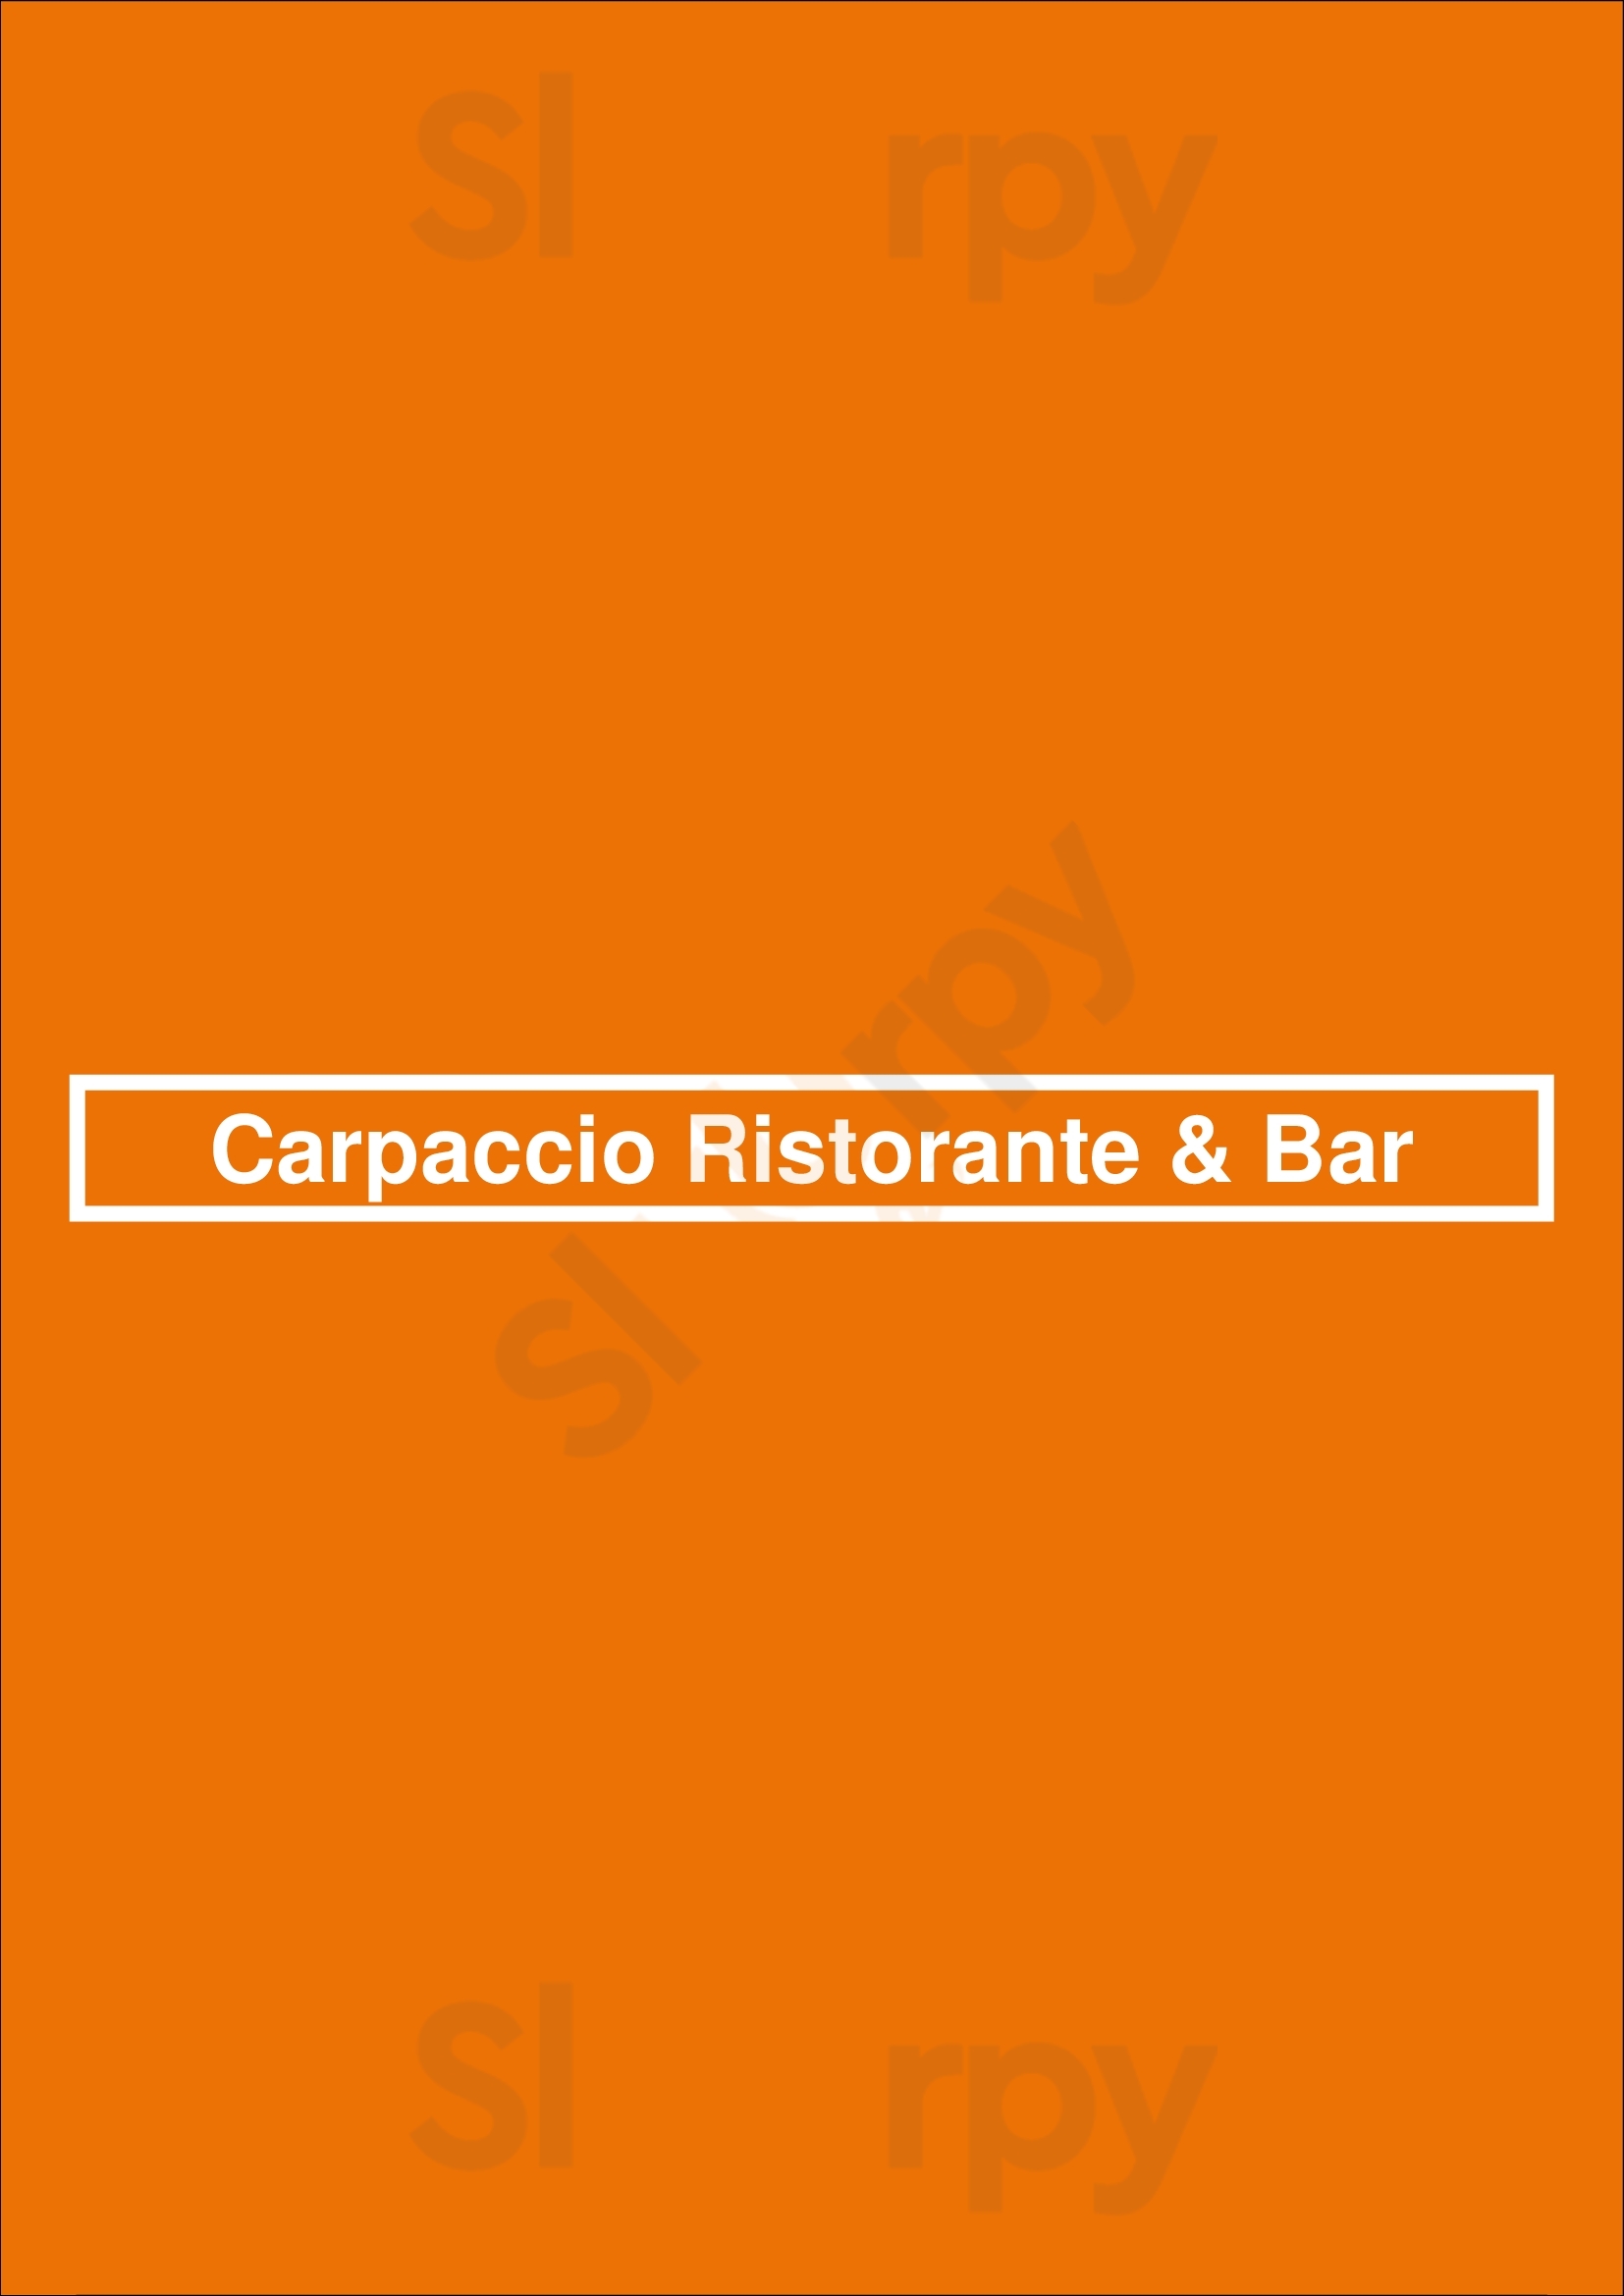 Carpaccio Ristorante & Bar Niagara Falls Menu - 1